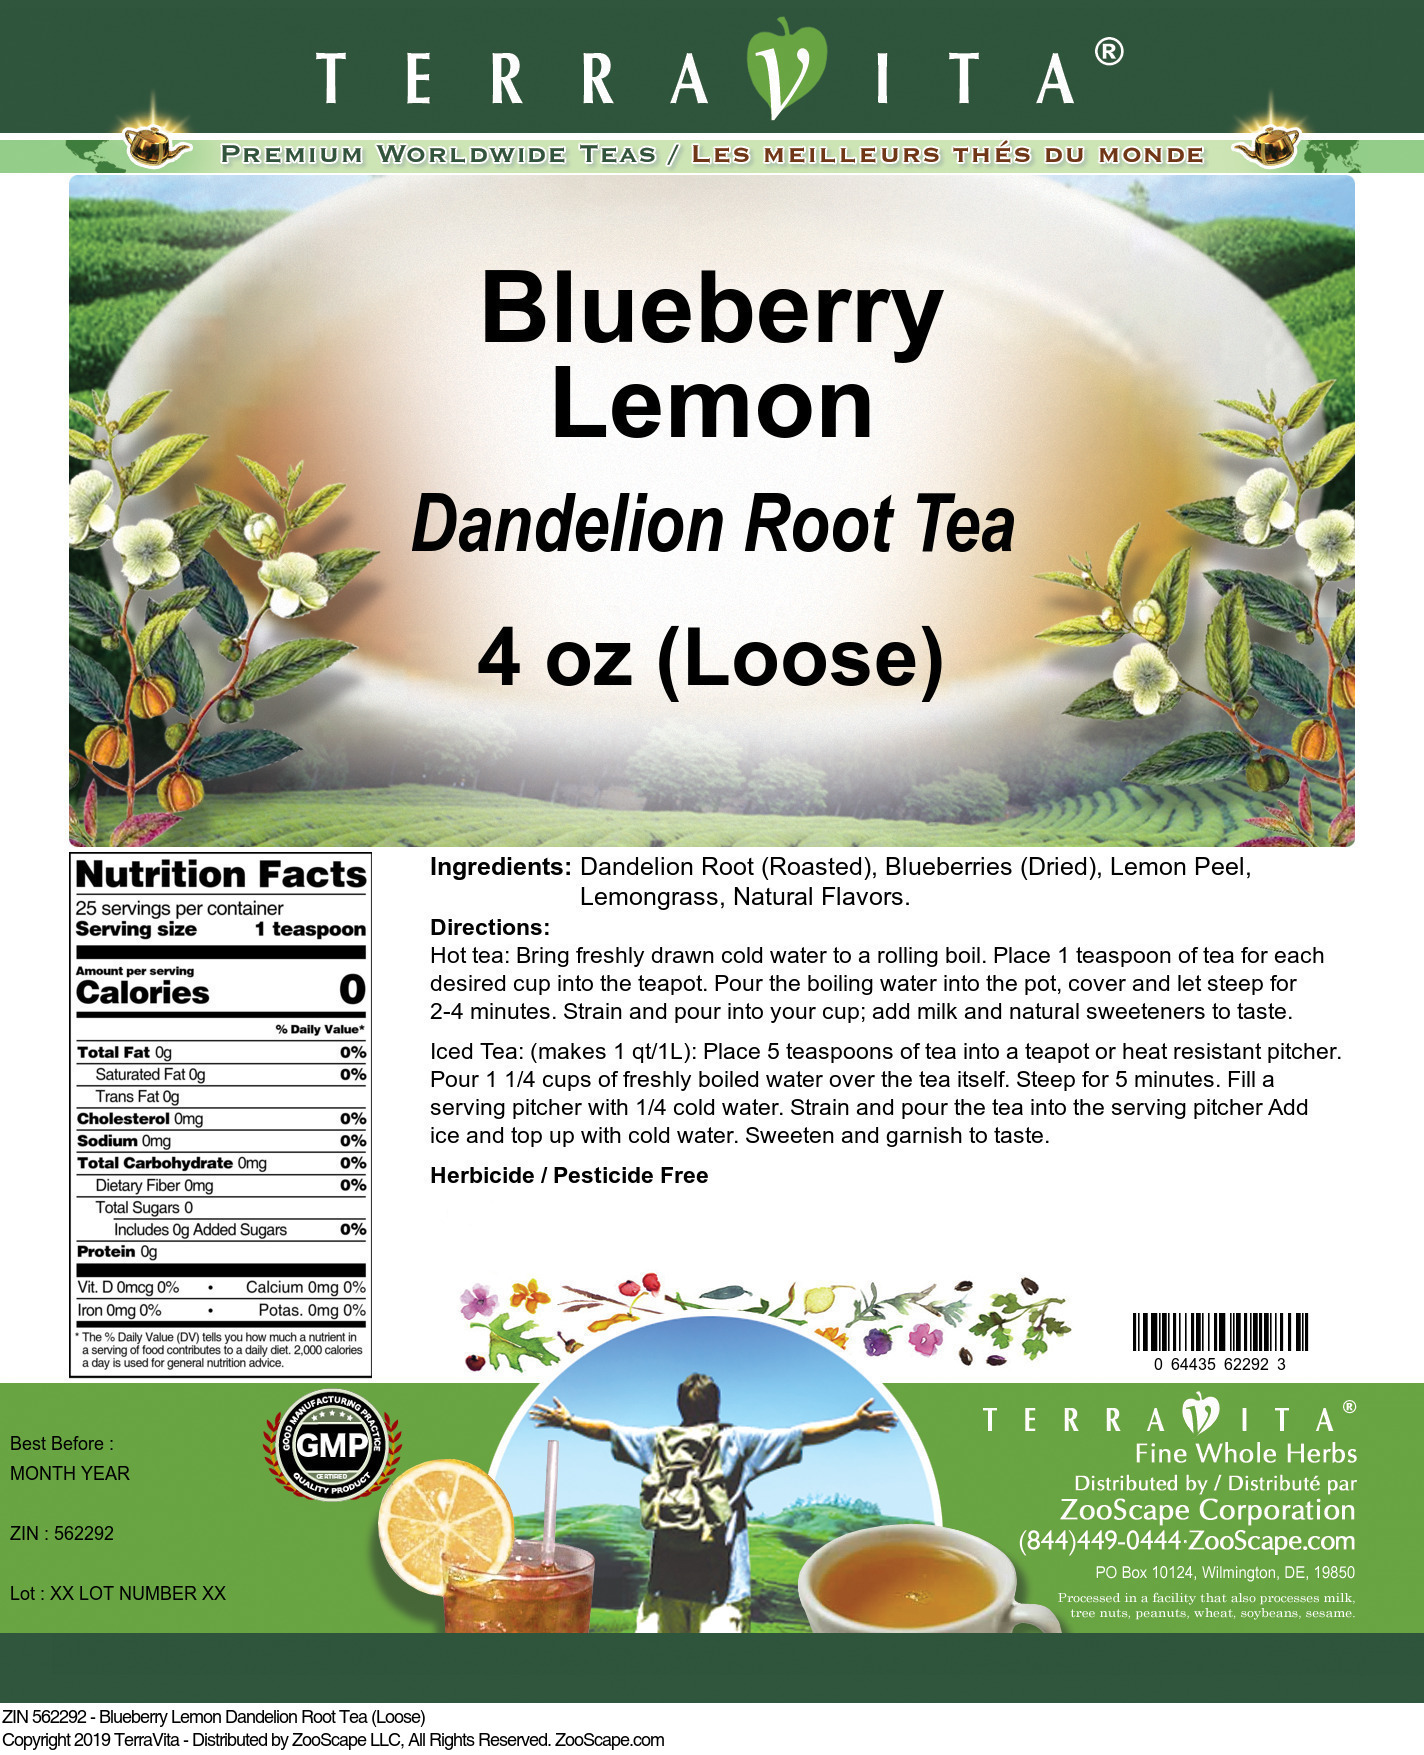 Blueberry Lemon Dandelion Root Tea (Loose) - Label